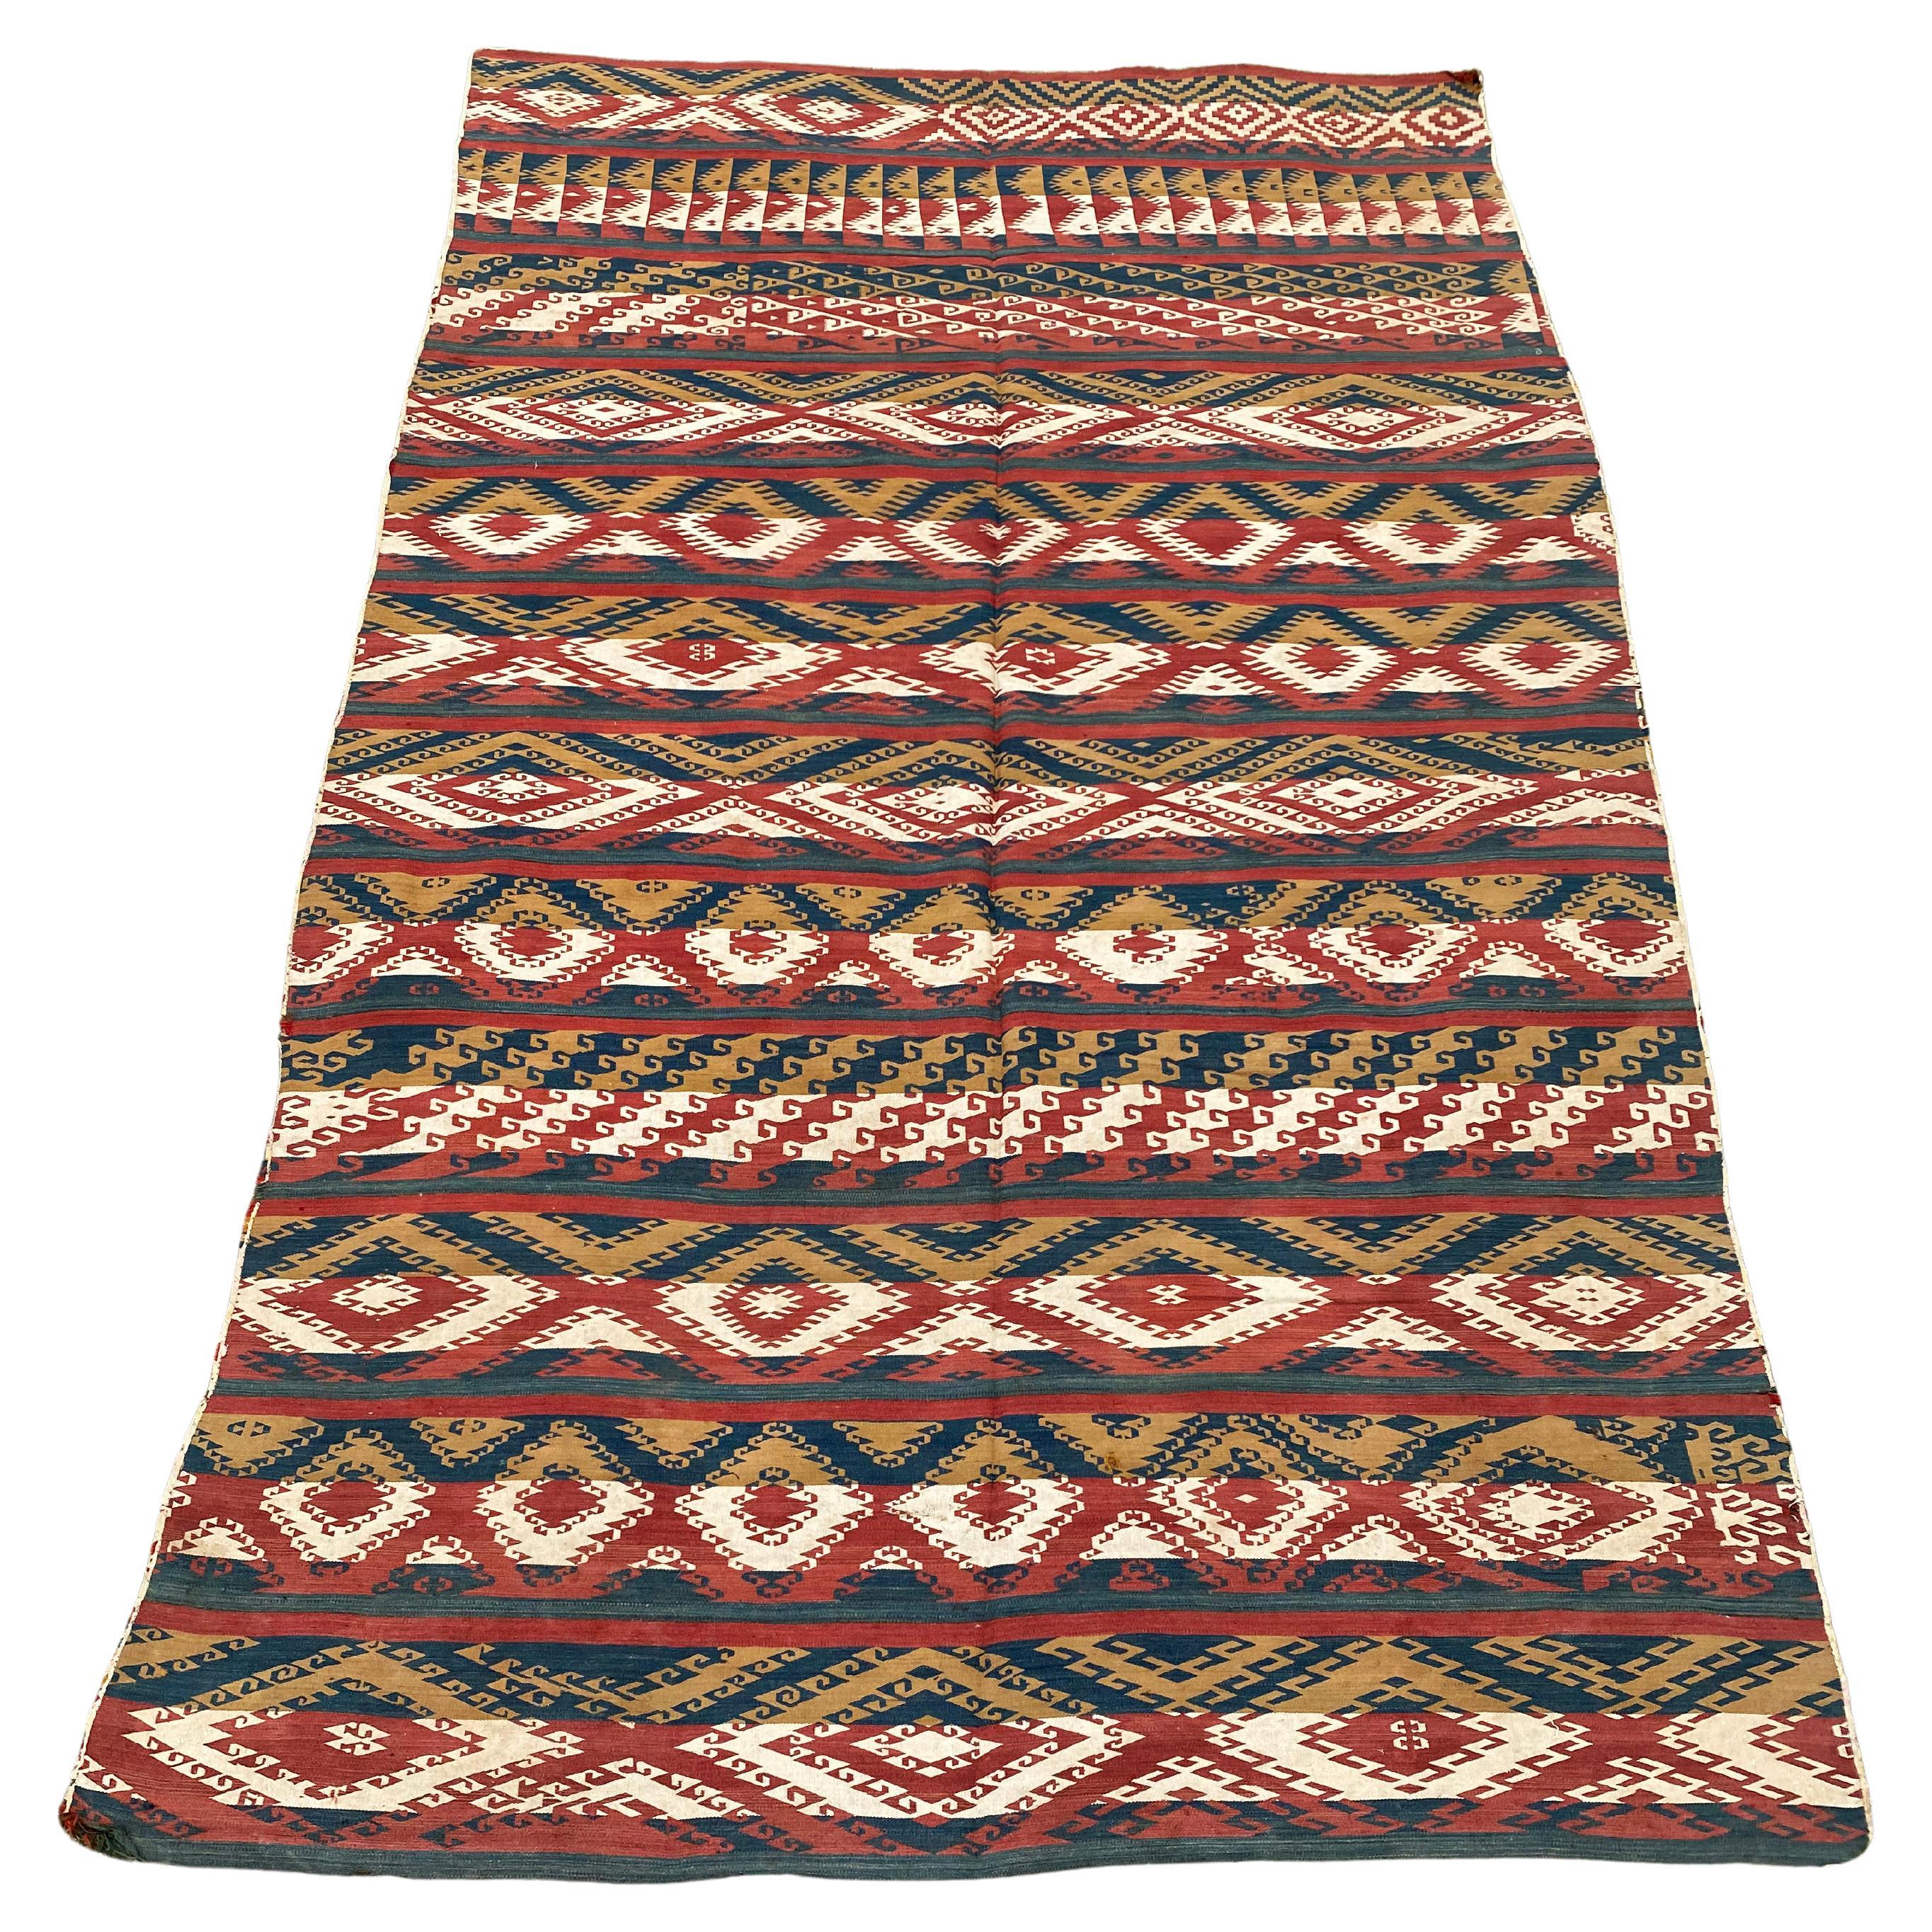 Uzbekistan Ghudjeri Tribal Kilim Rug from Wool, Room Size, Early 20th Century